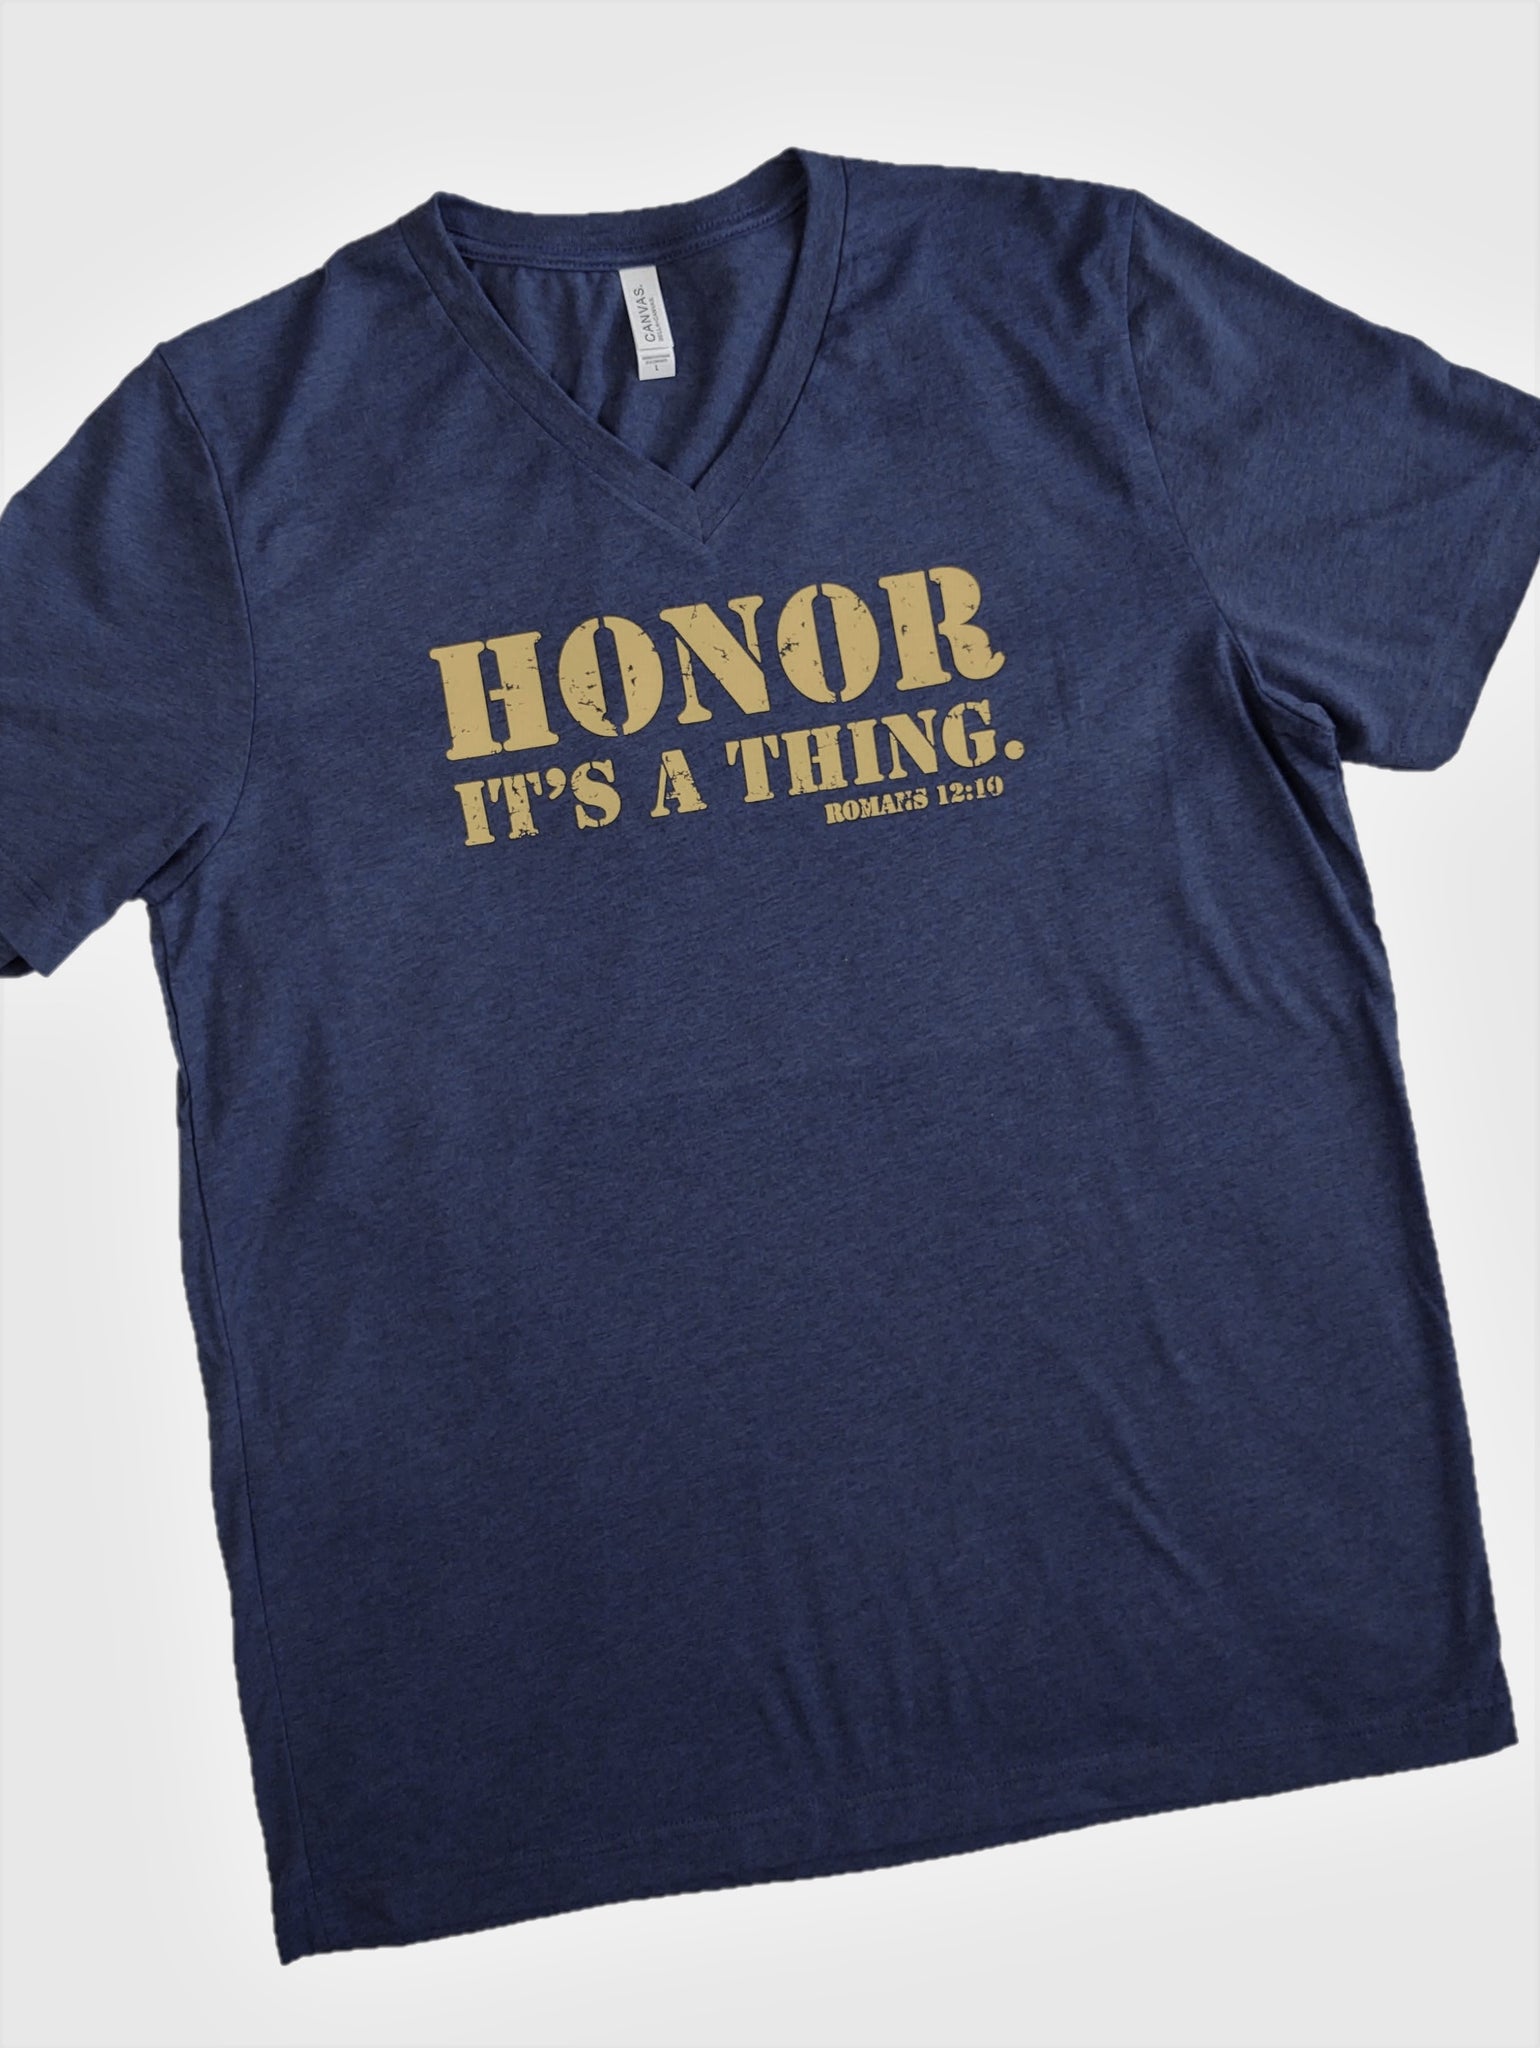 "HONOR. It's a thing." Short Sleeve Tee Shirt, V-Neck, Navy Tri-Blend, Gold